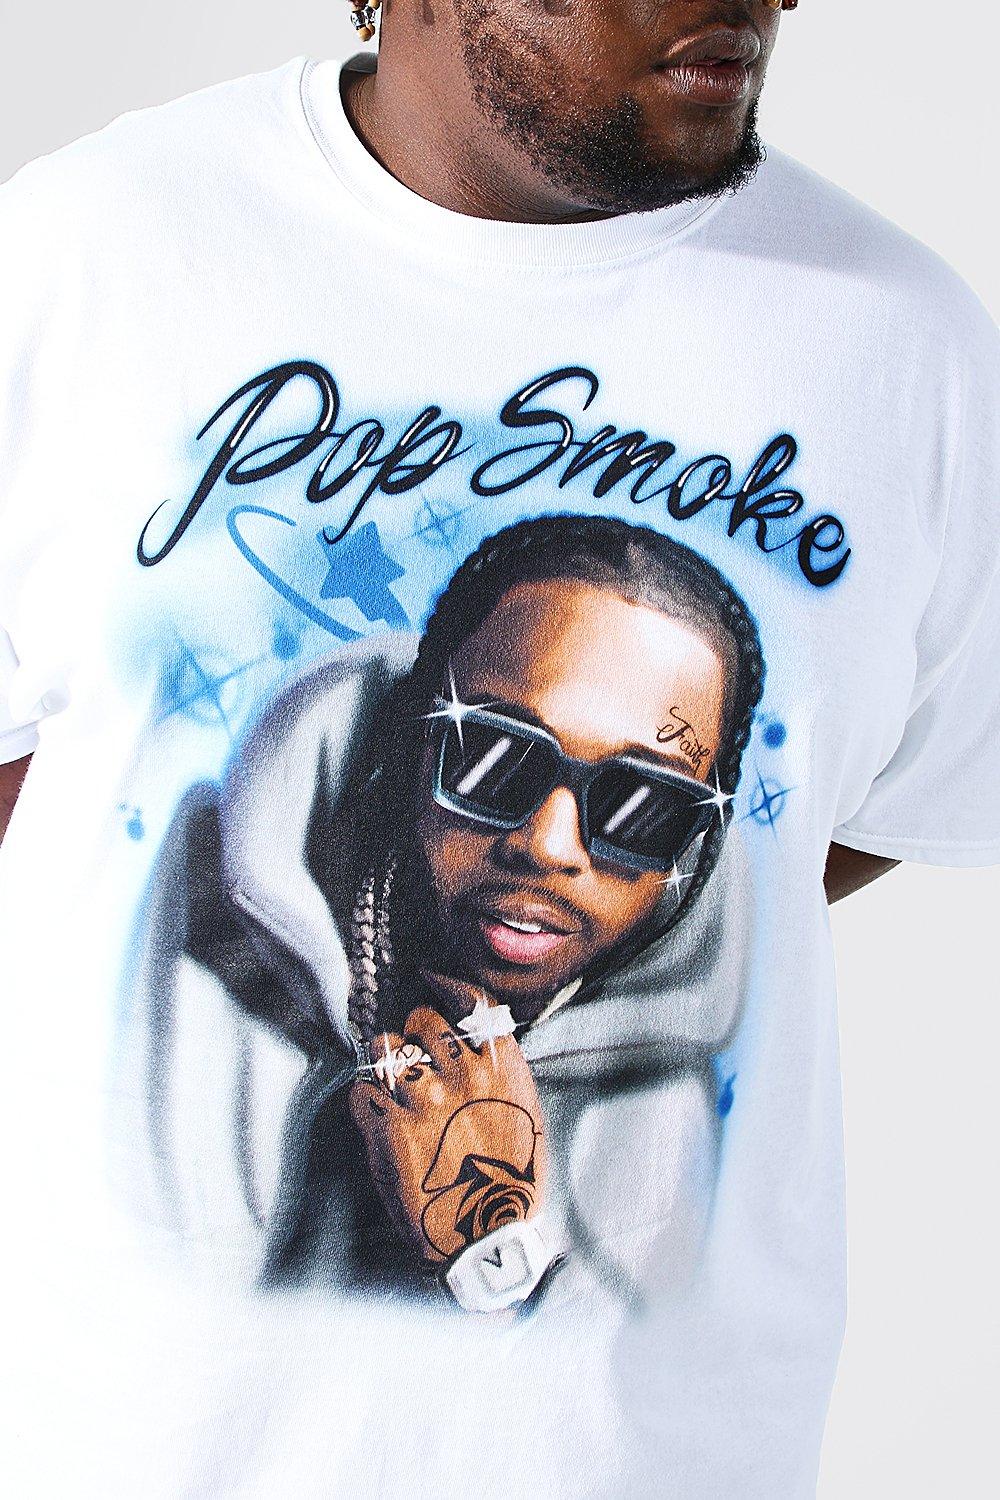 Plus Pop Smoke Homage Licensed T-shirt